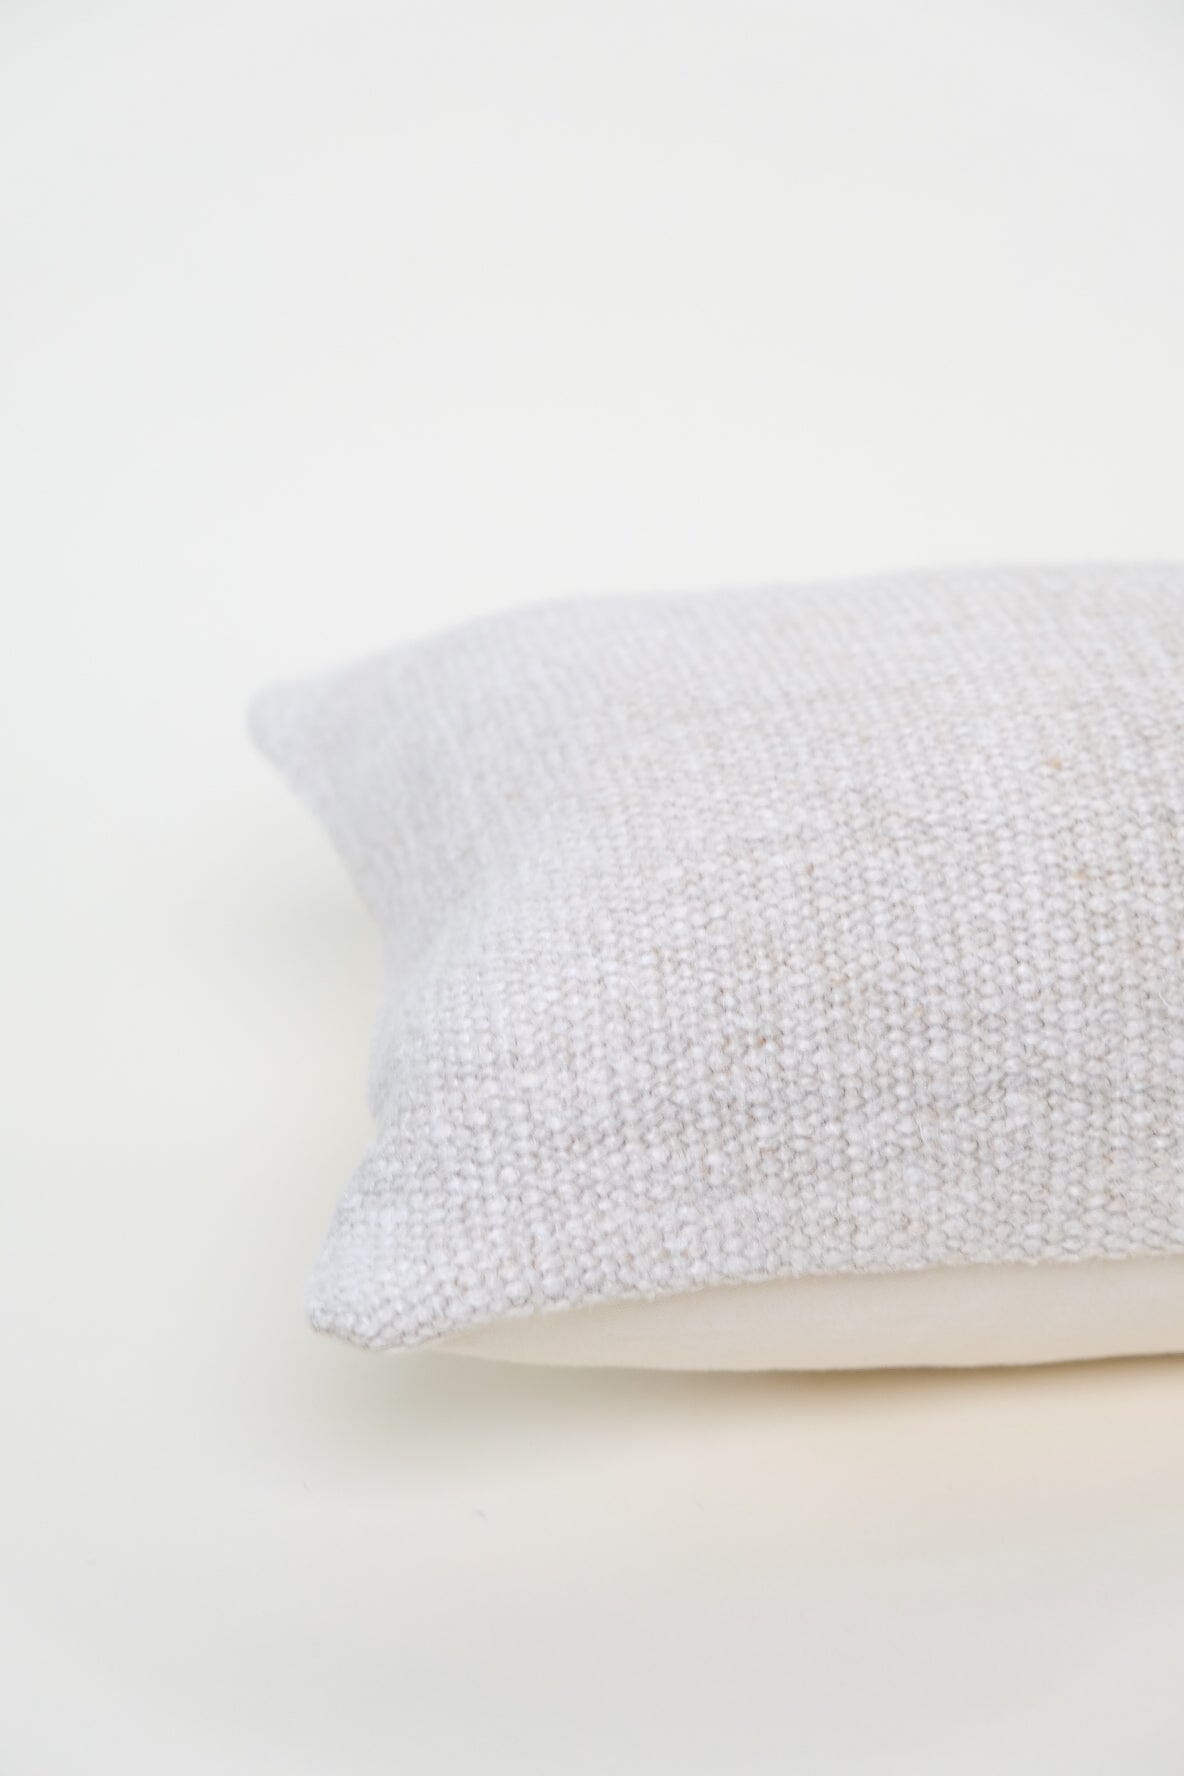 Sal Kilim Lumbar Kilim Pillow Twenty Third by Deanne 